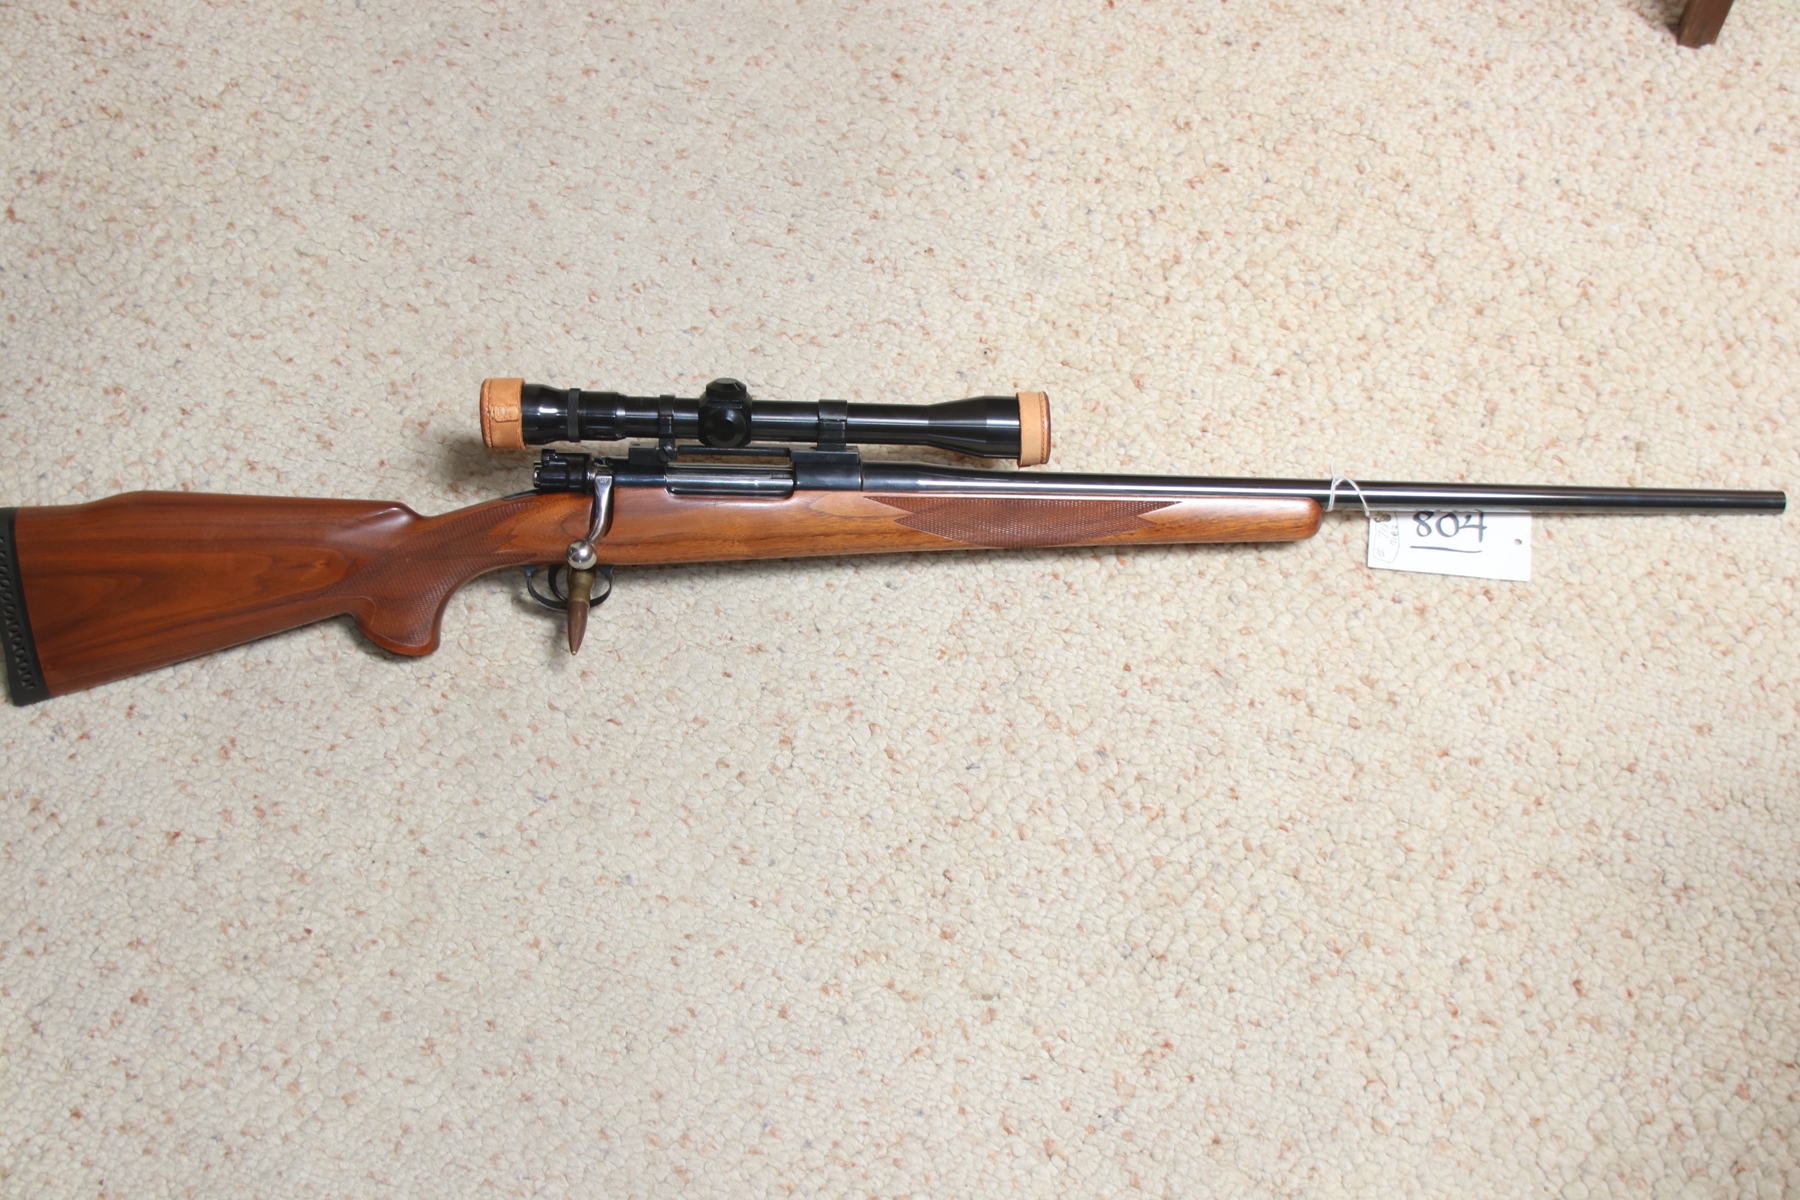 7mm mauser rifle identification